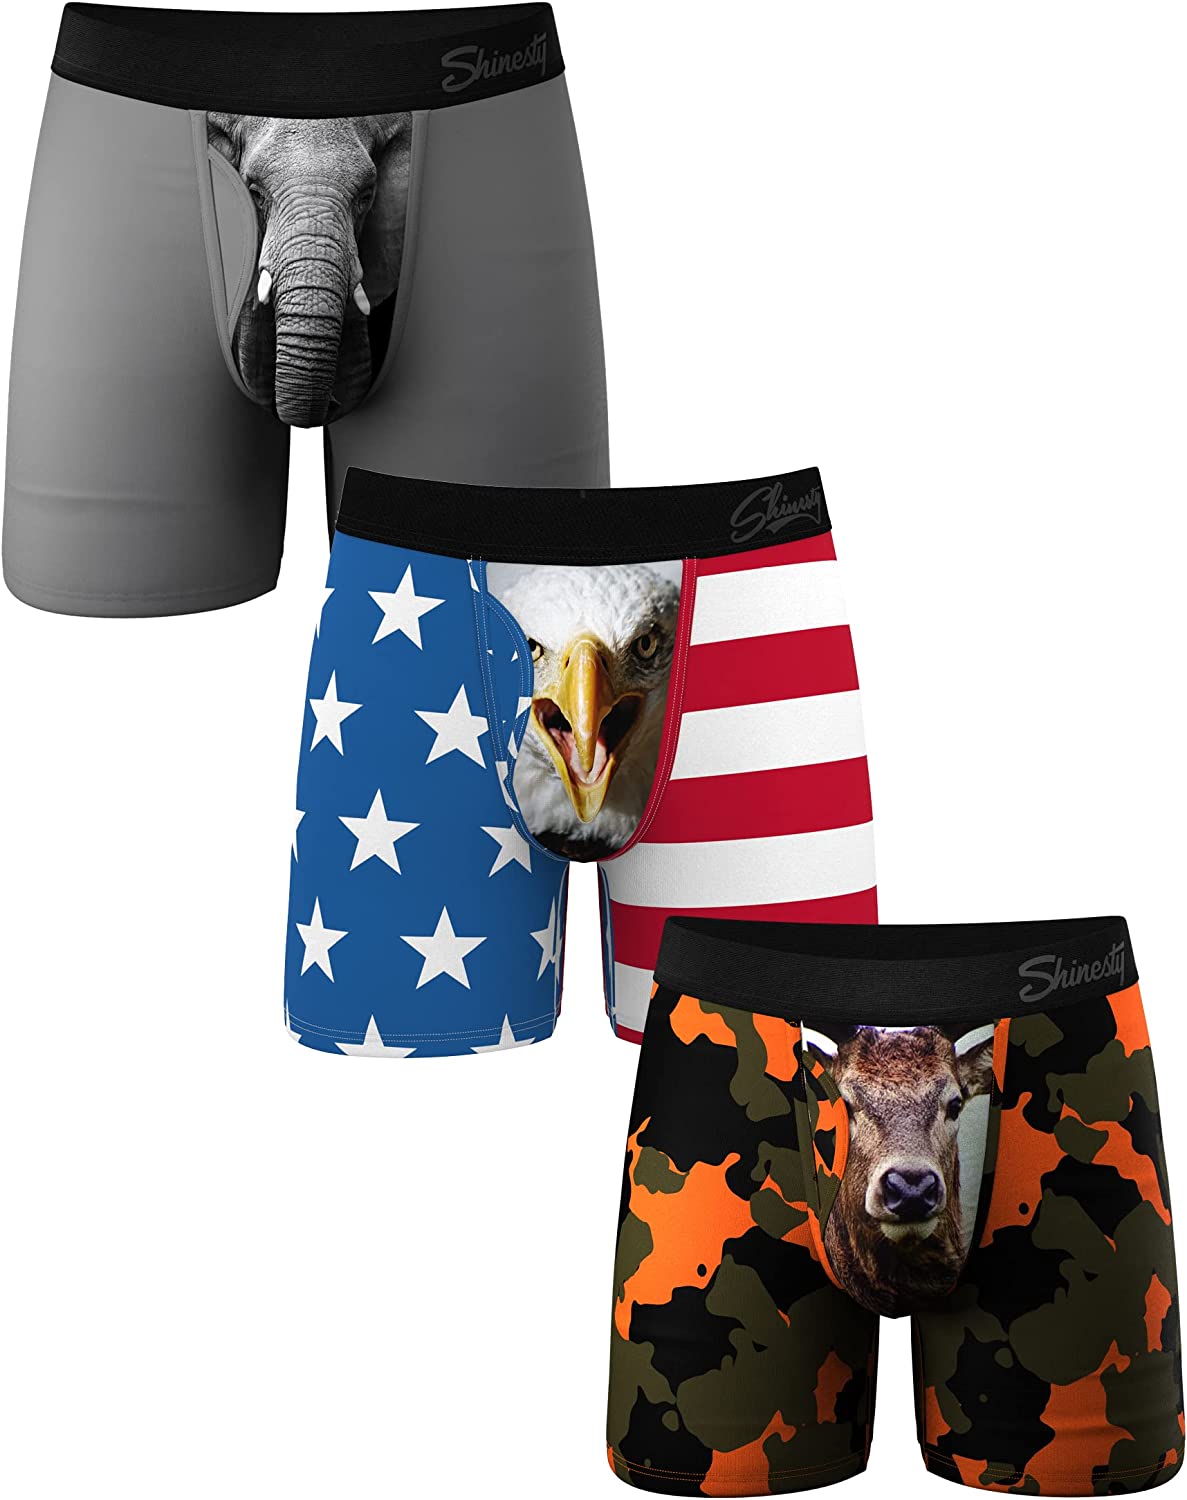 Shinesty Mens Boxer Brief w/ fly 3 Pack - Men's Ball Hammock Pouch  Underwear 3 P